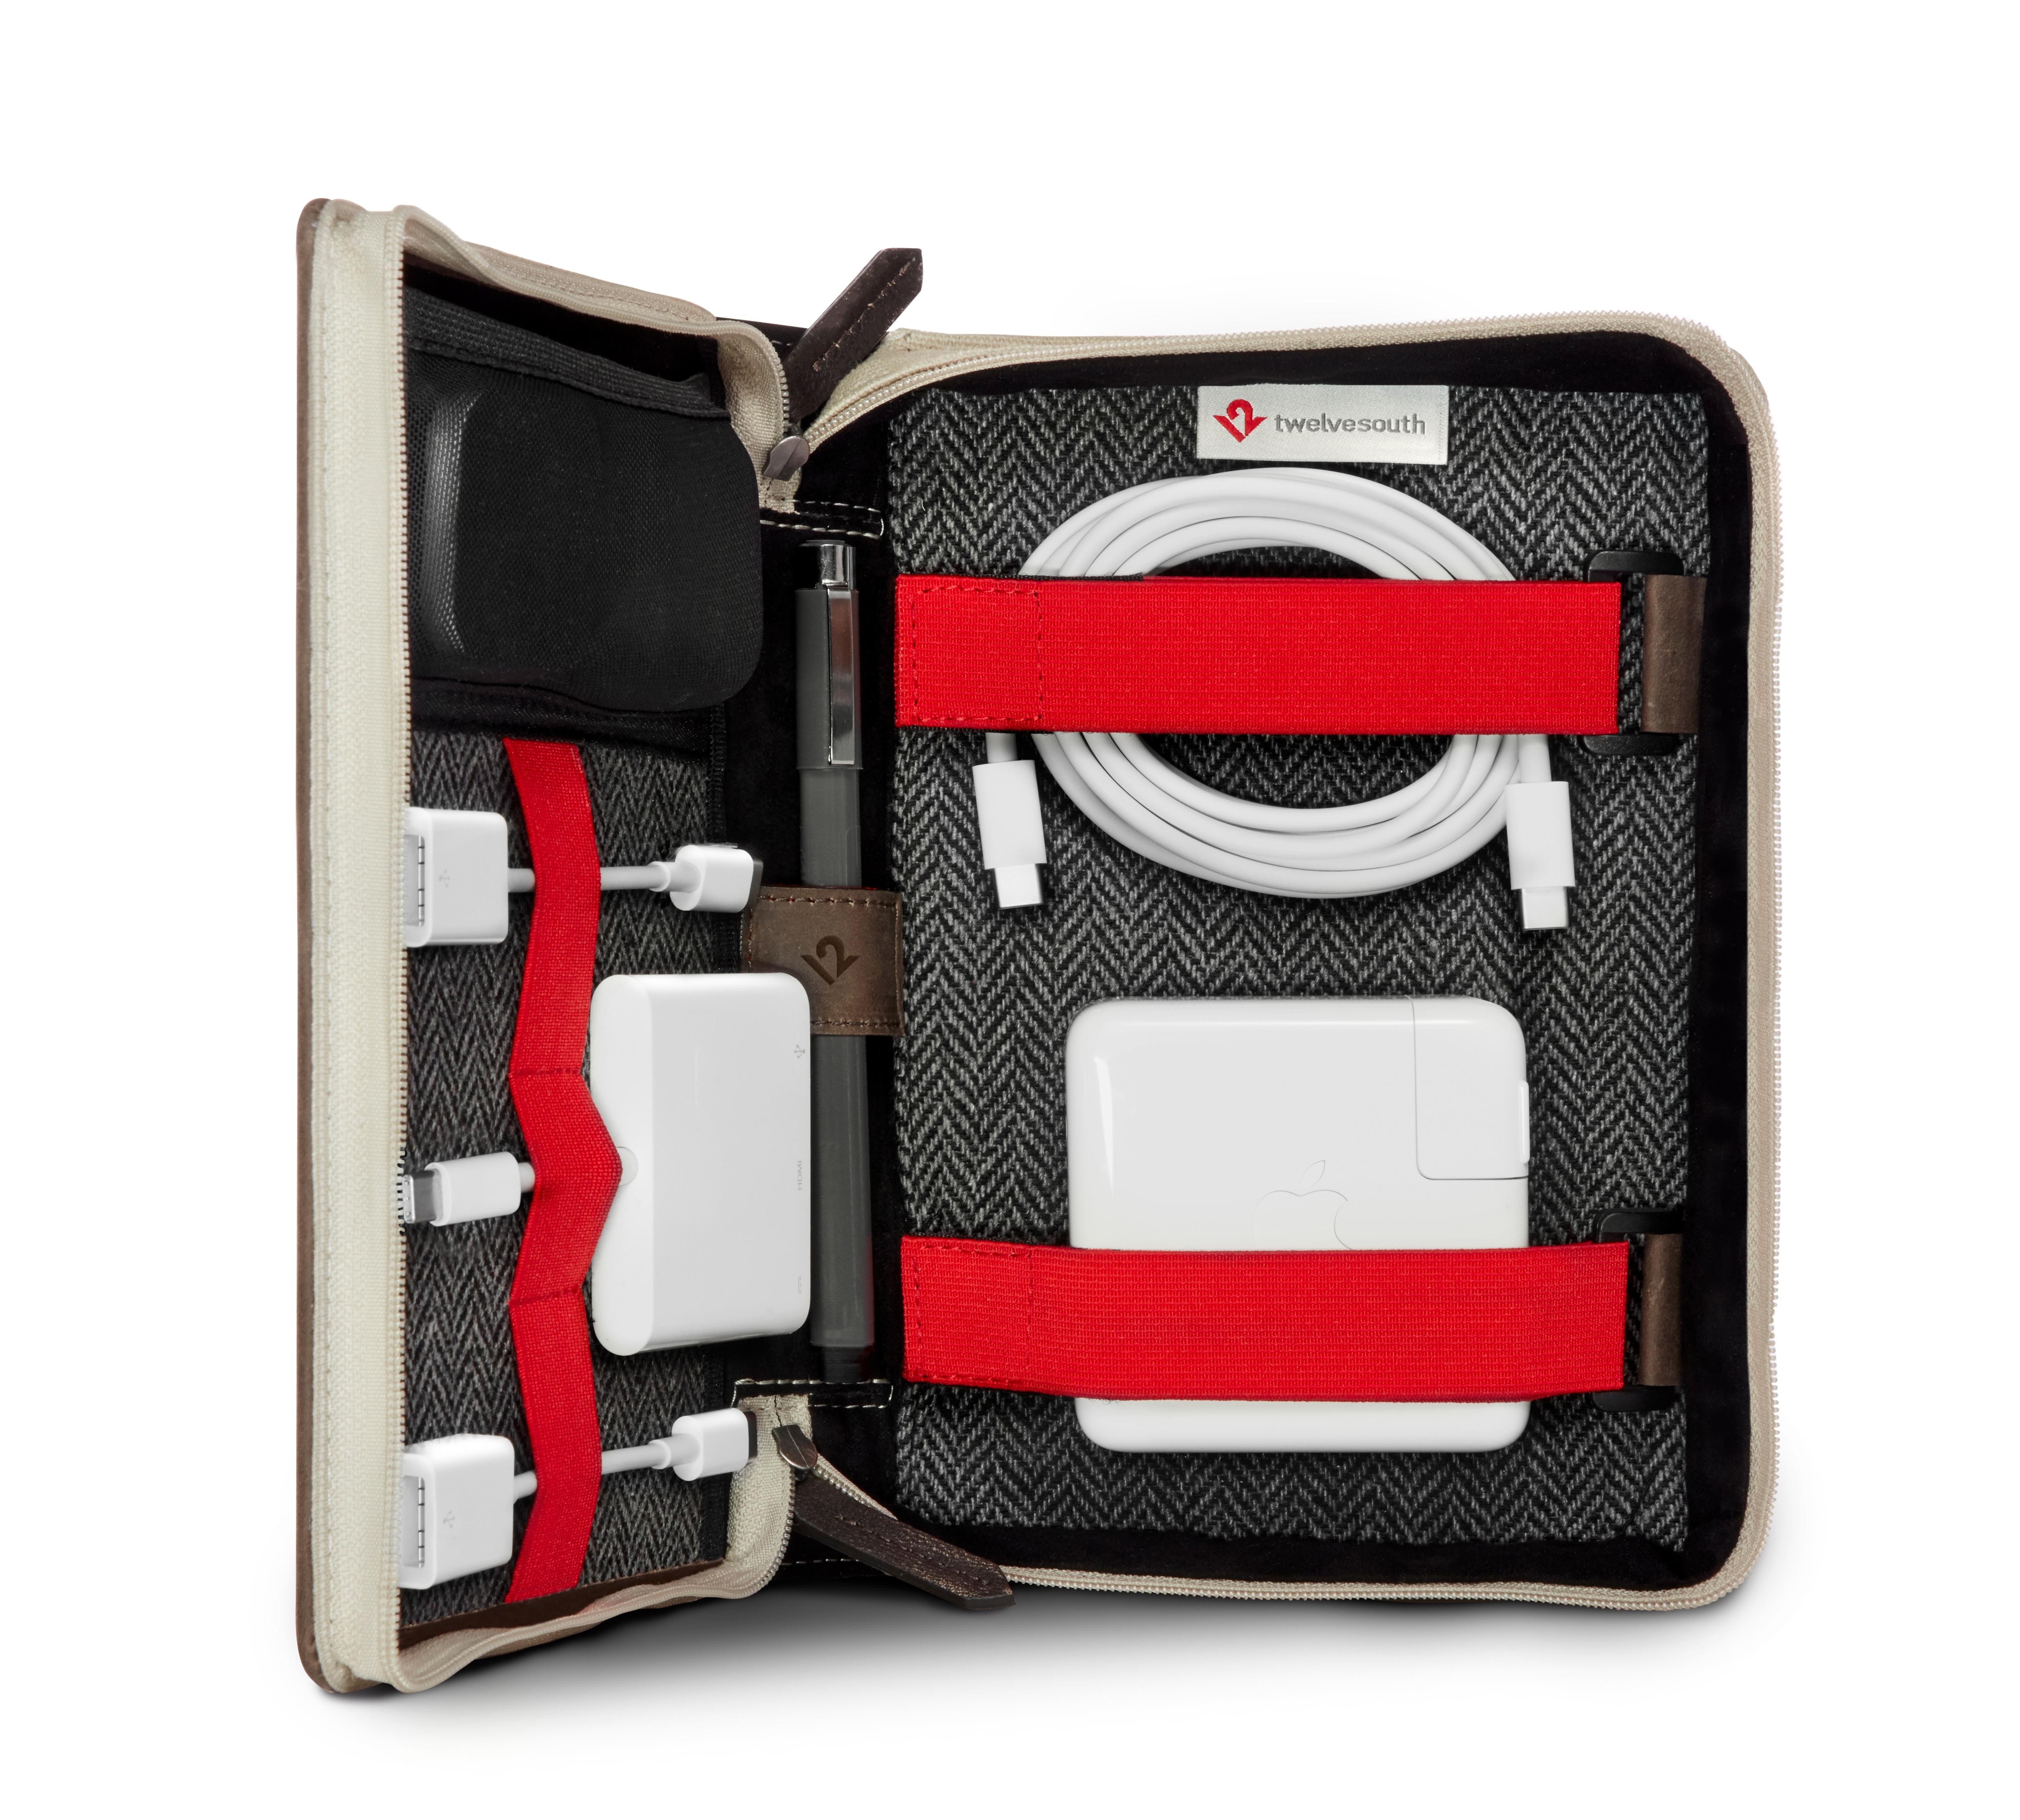 Twelve South BookBook CaddySack - borsa da viaggio per adattatori, alimentatori, cavi e accessori di ogni genere